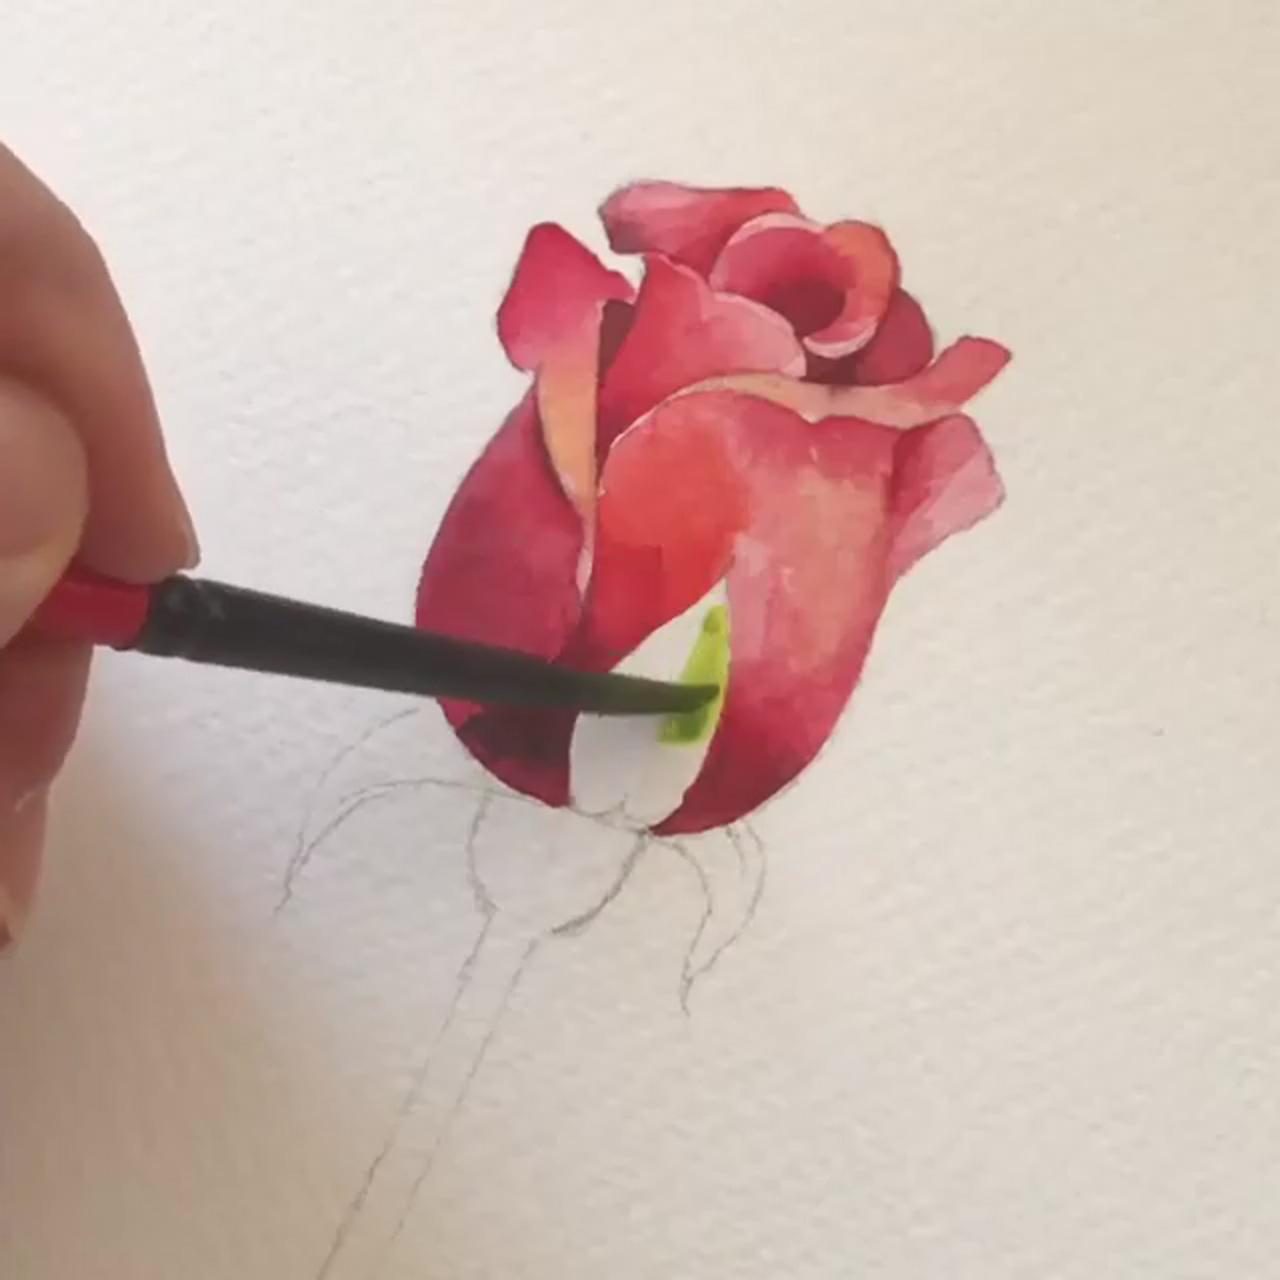 Watercolor painting techniques; watercolor art lessons